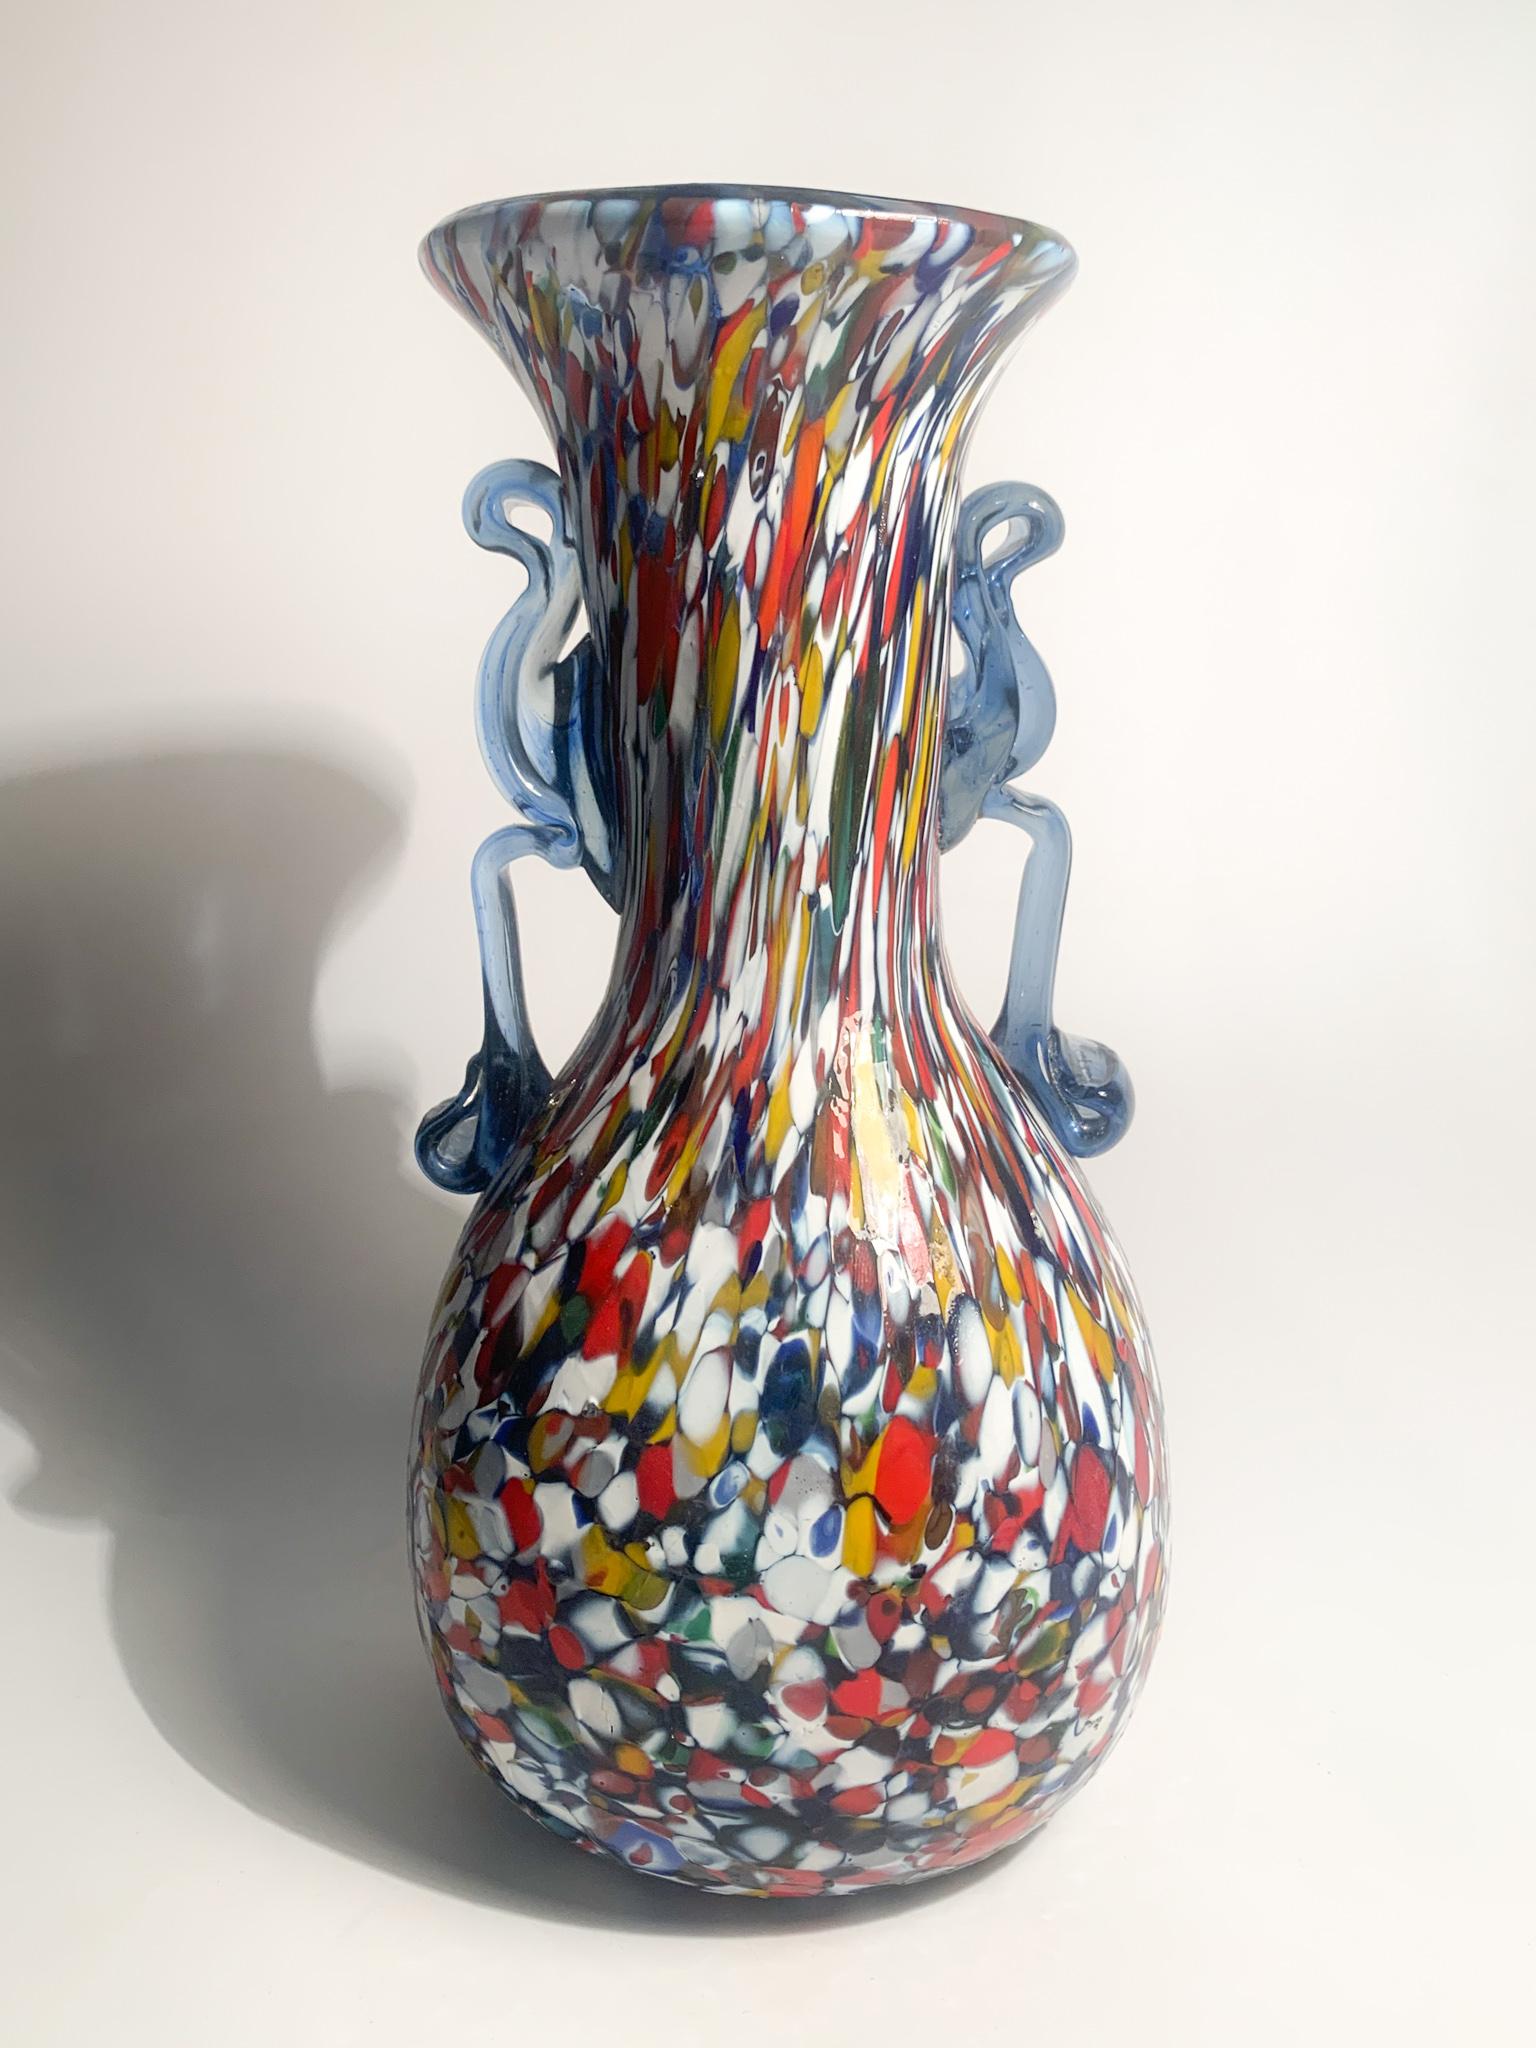 Ansato Multicolored Vase in Murano Glass with Murrine from the 1940s 7